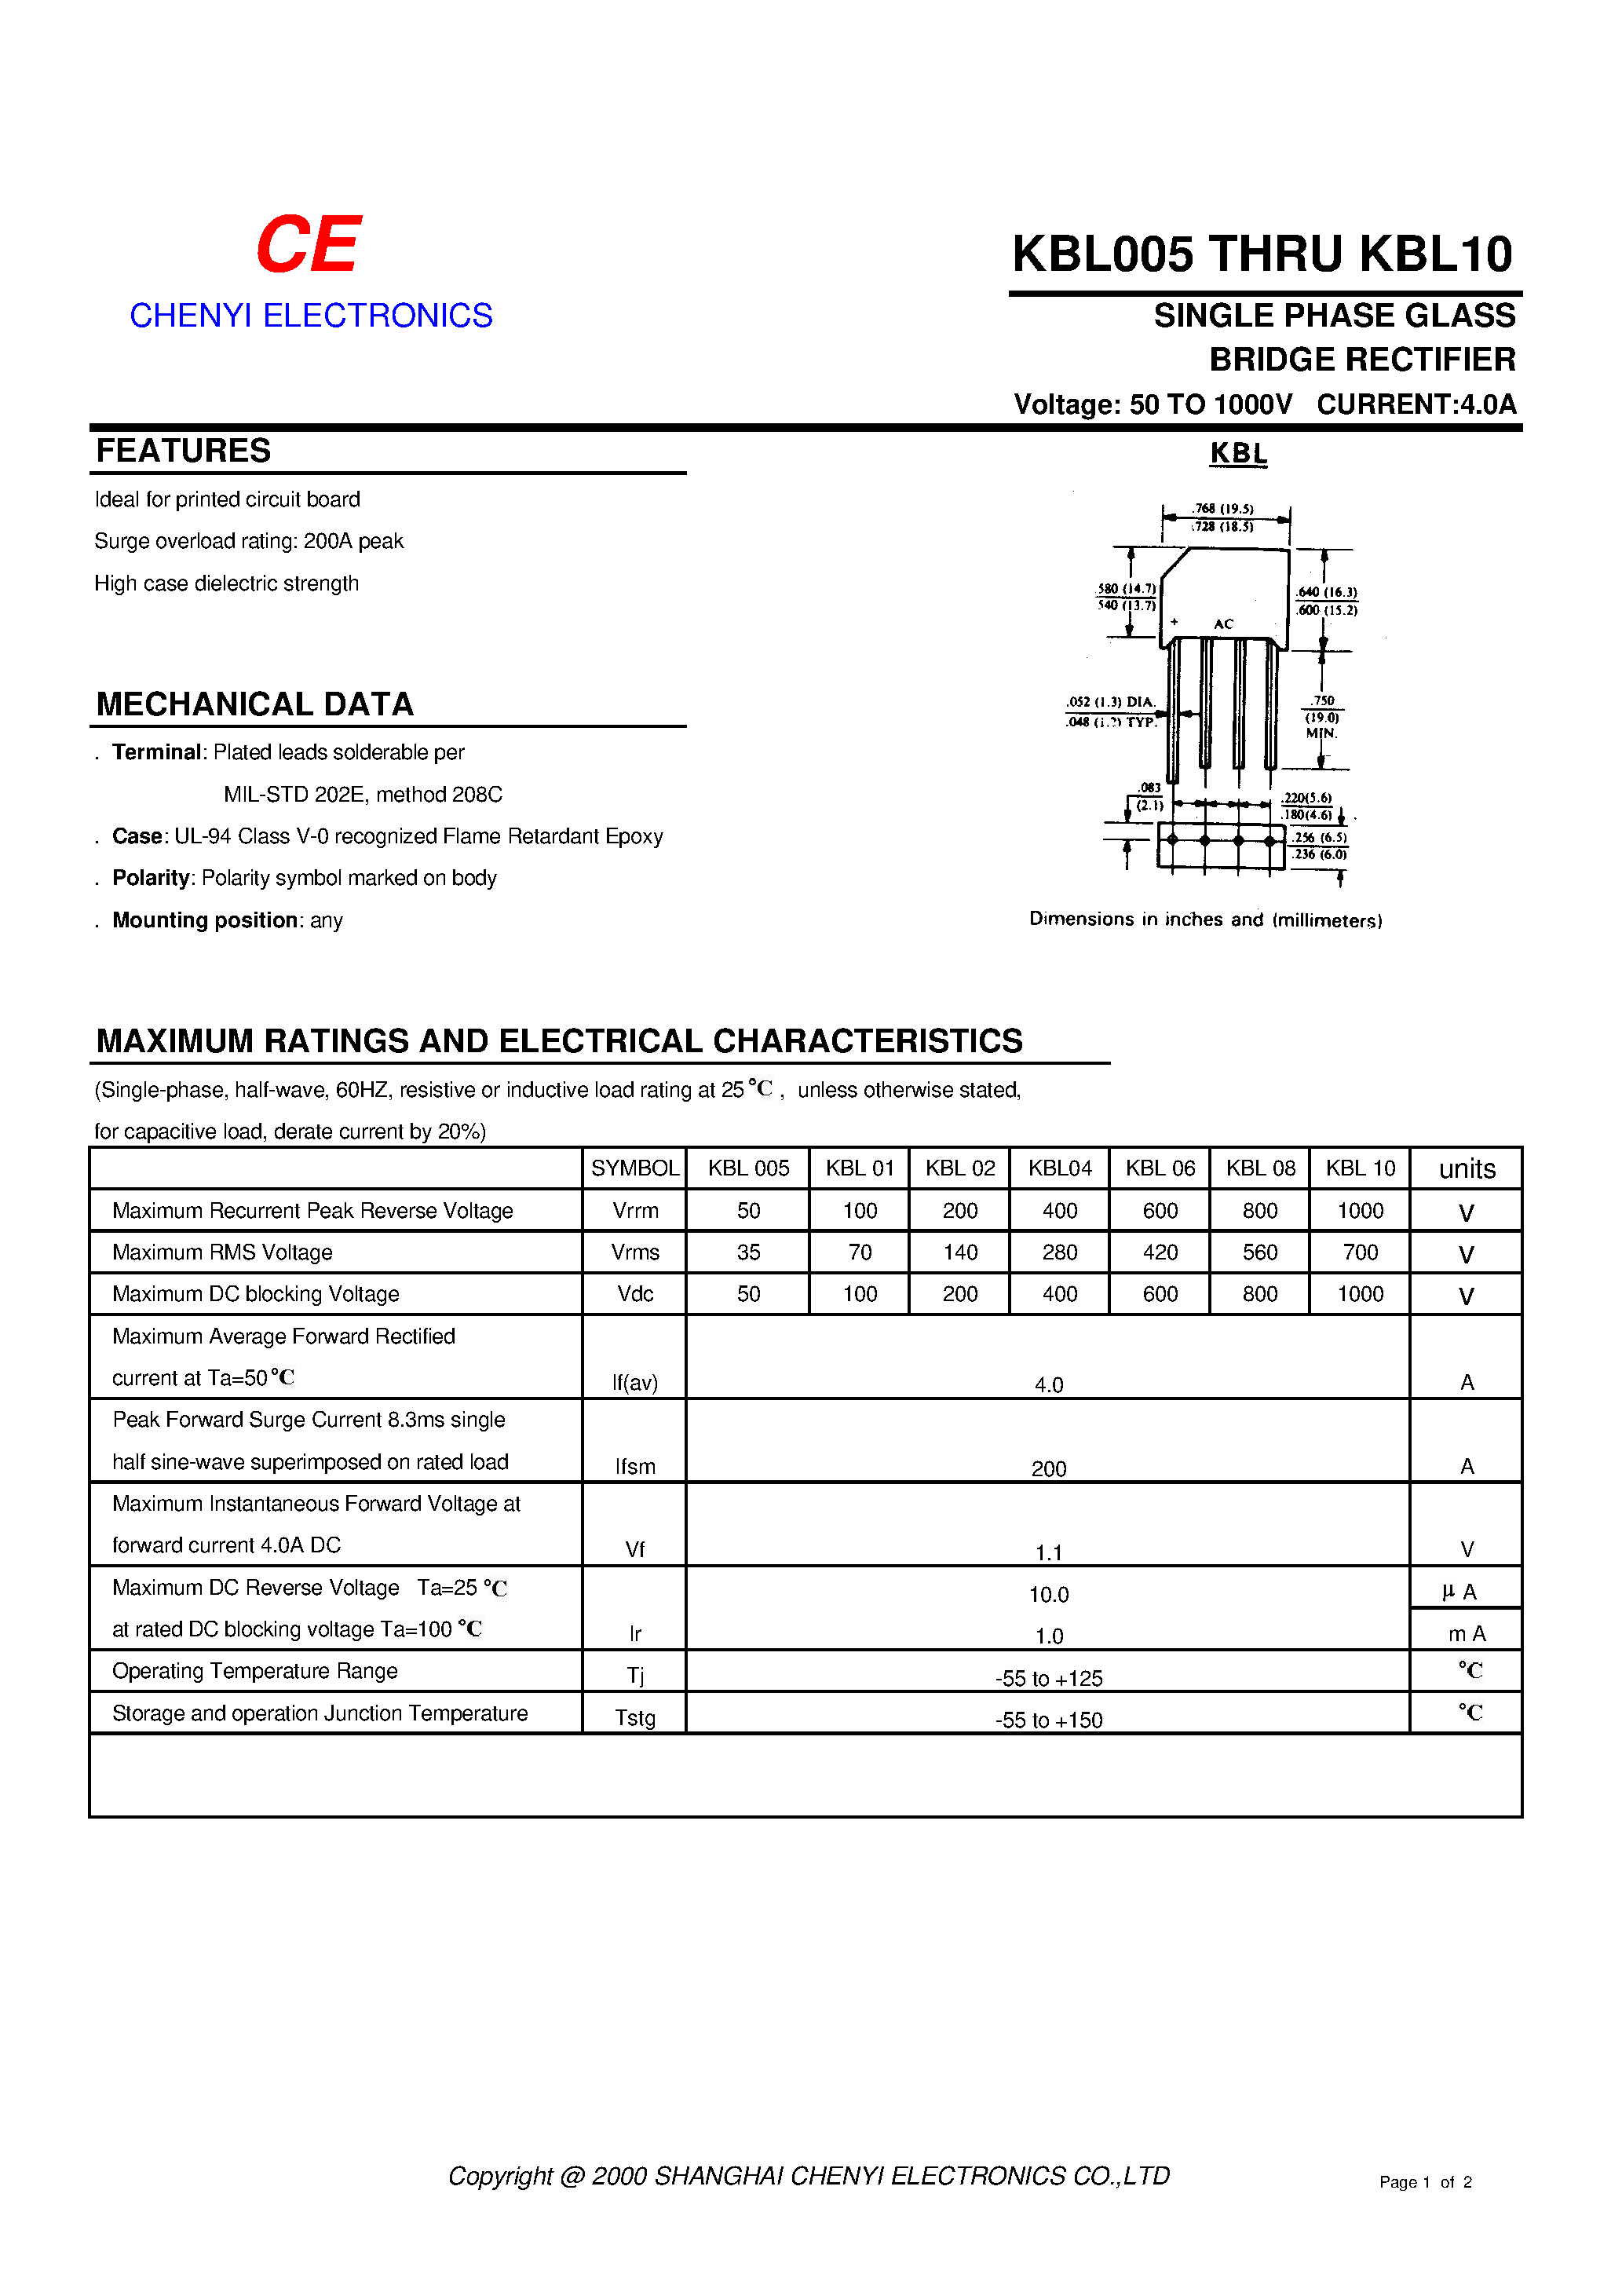 Datasheet KBL02 - SINGLE PHASE GLASS BRIDGE RECTIFIER page 1